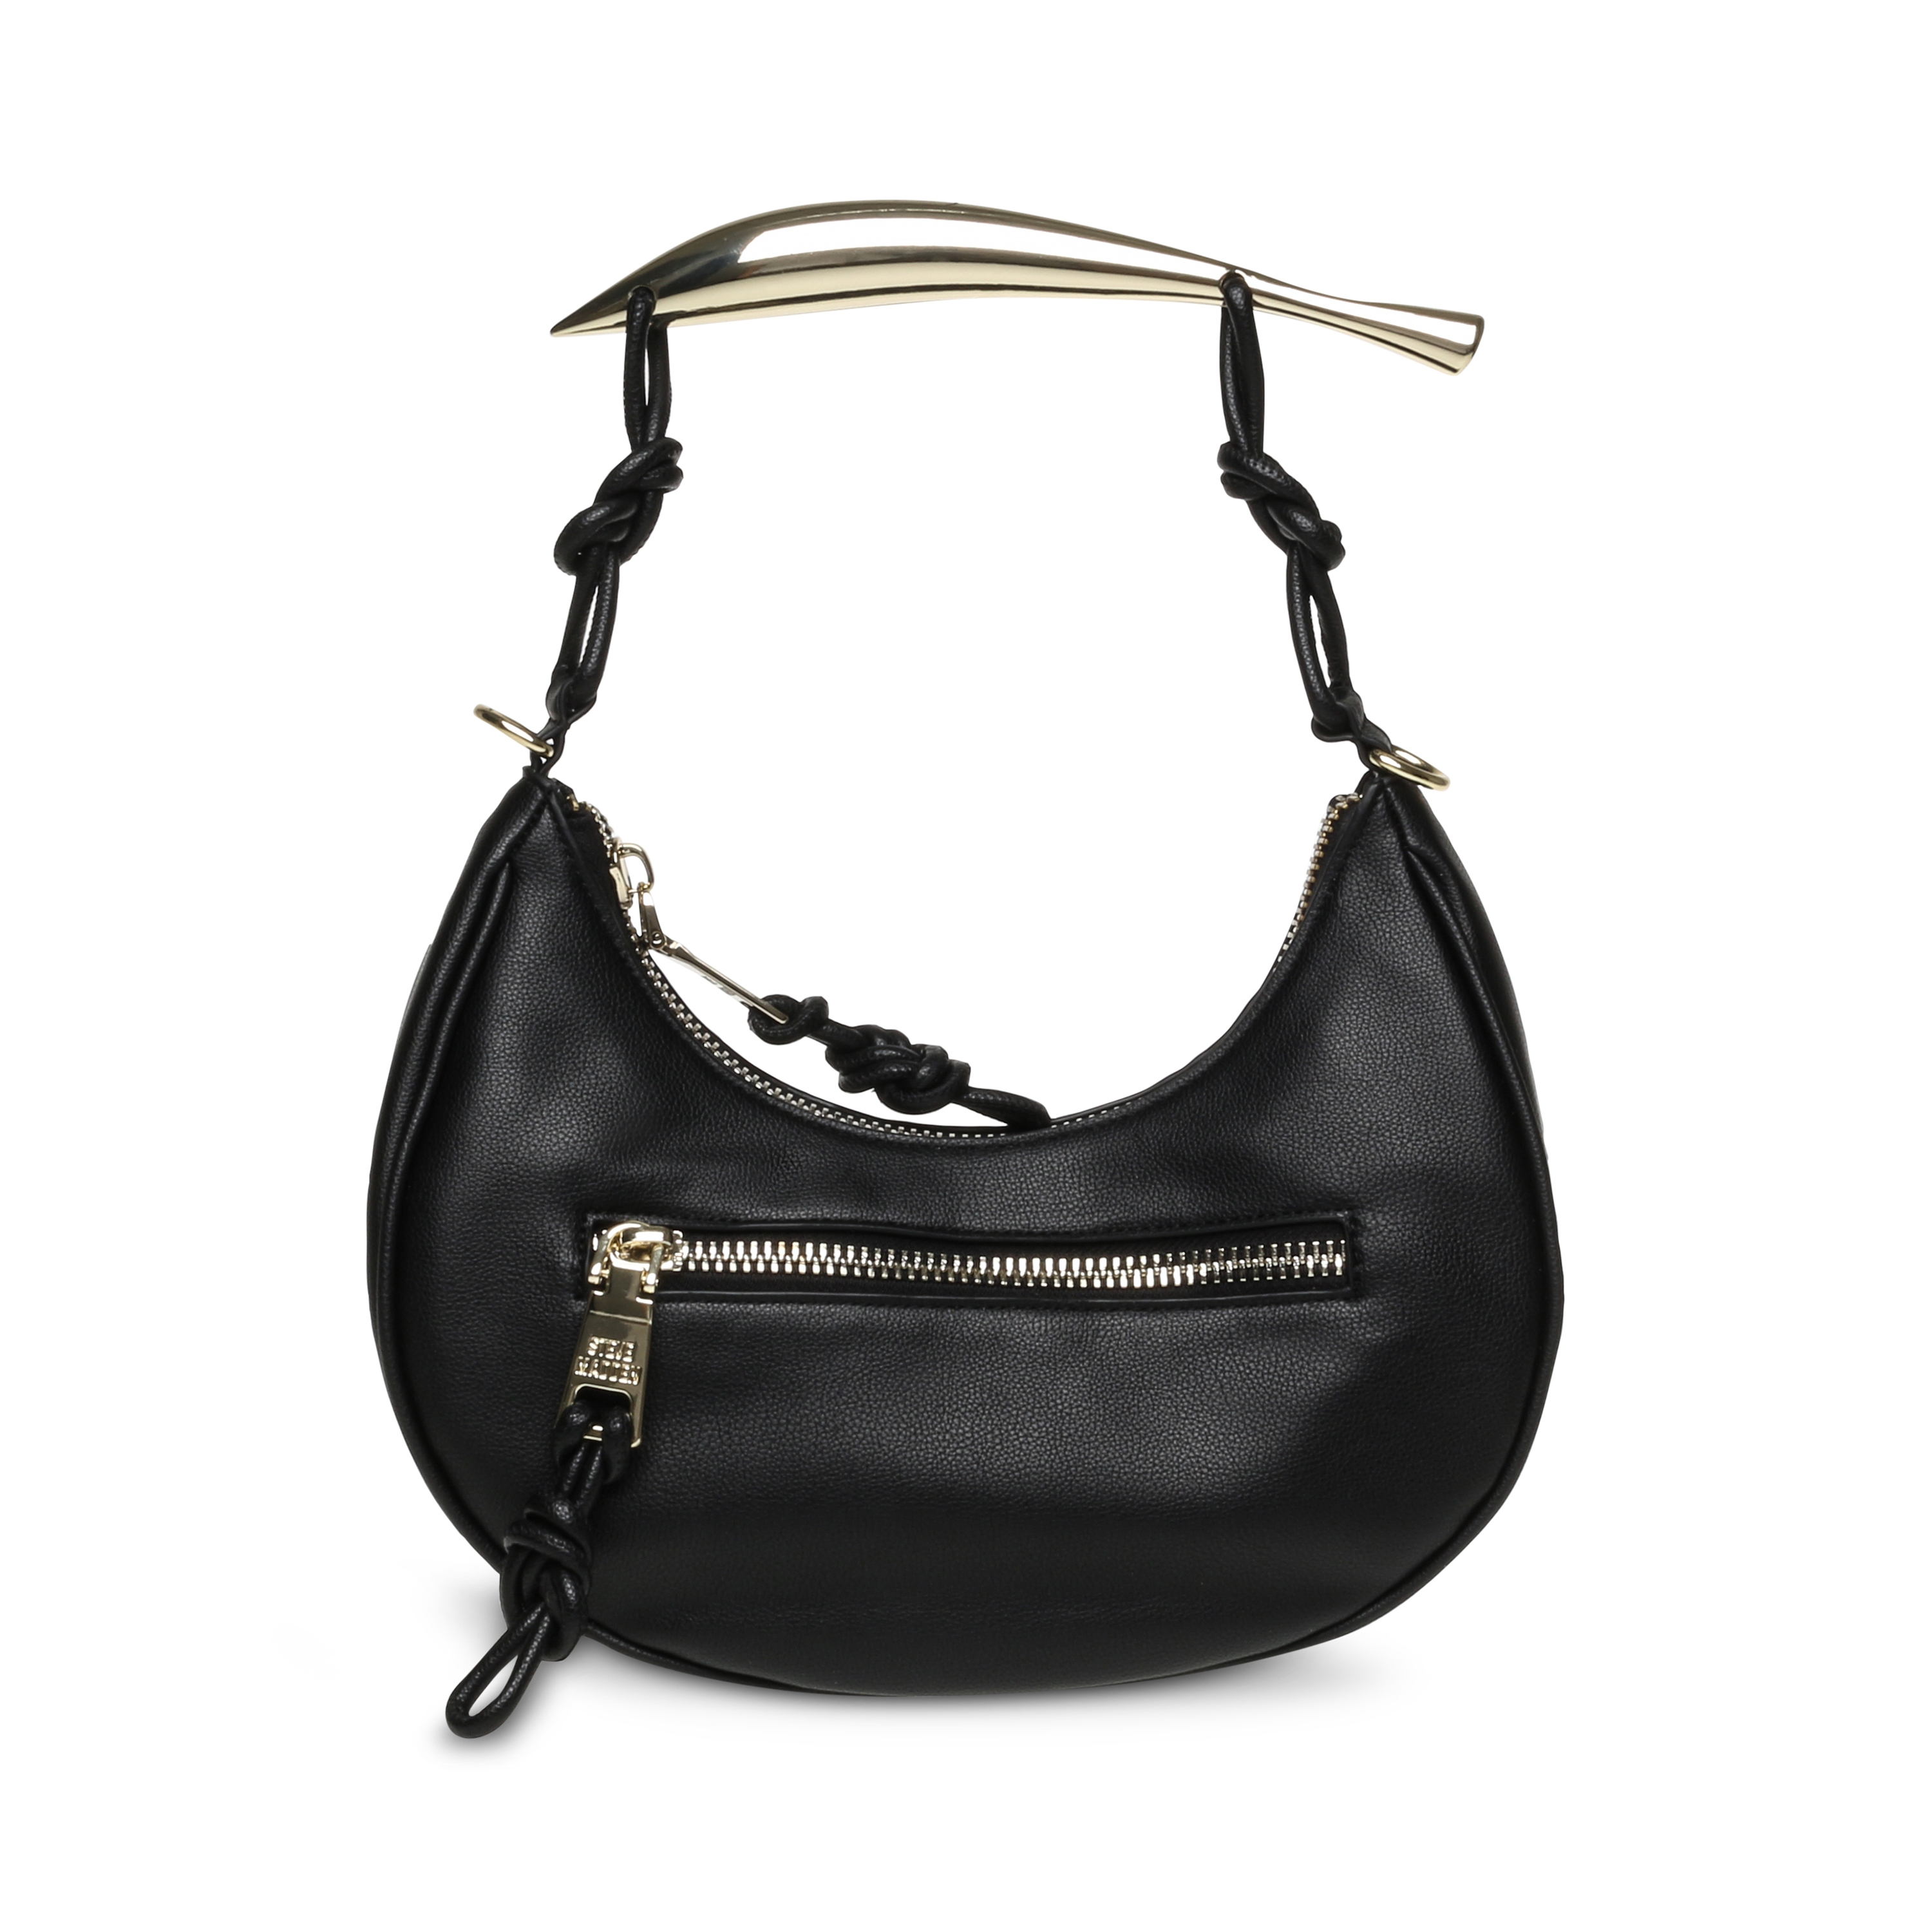 Coal Bag Black/black | Bags, Black crossbody purse, Steve madden bags